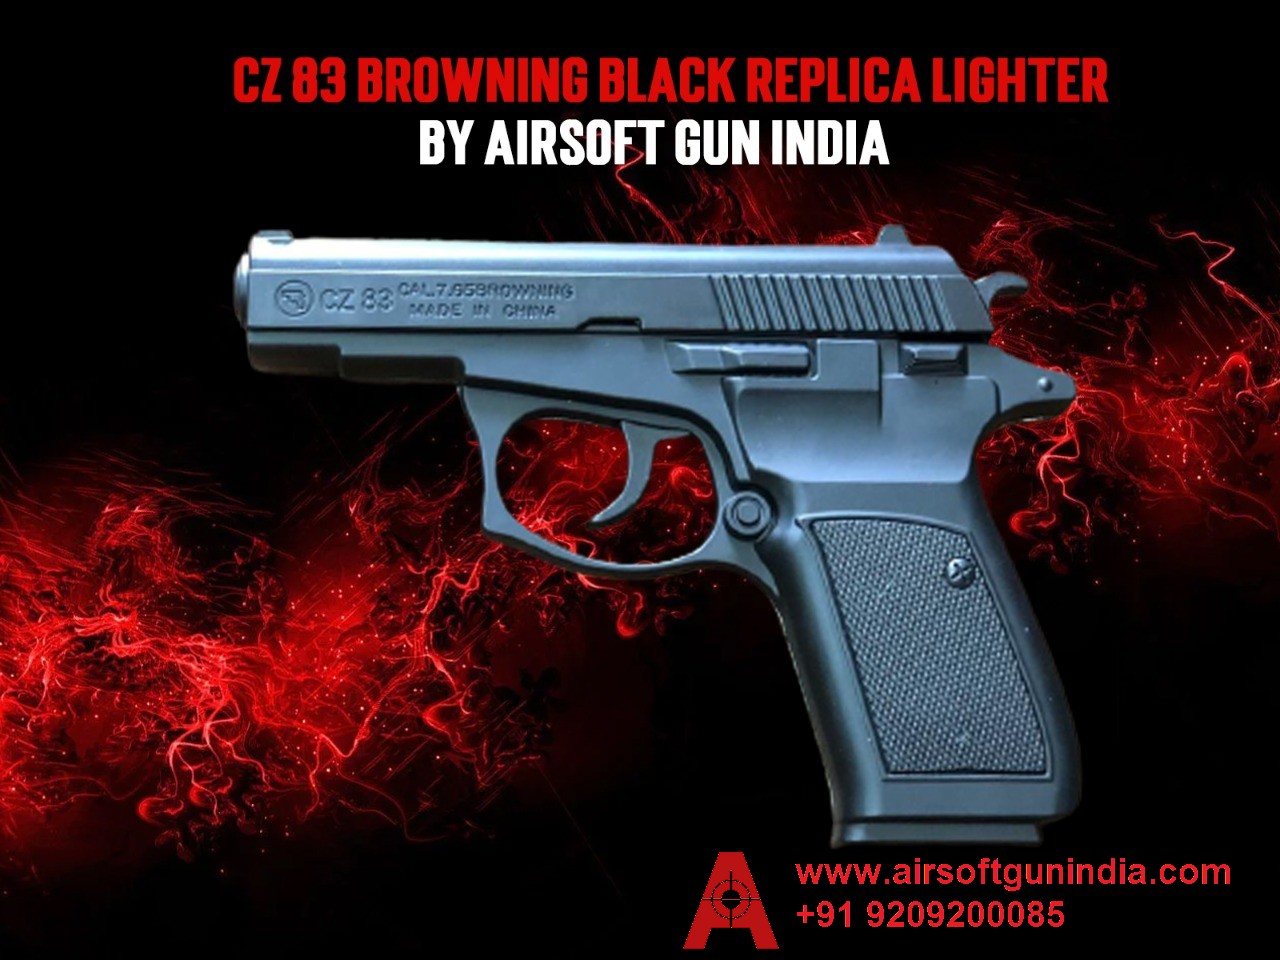 CZ 83 BROWNING BLACK REPLICA LIGHTER GUN BY AIRSOFT GUN INDIA